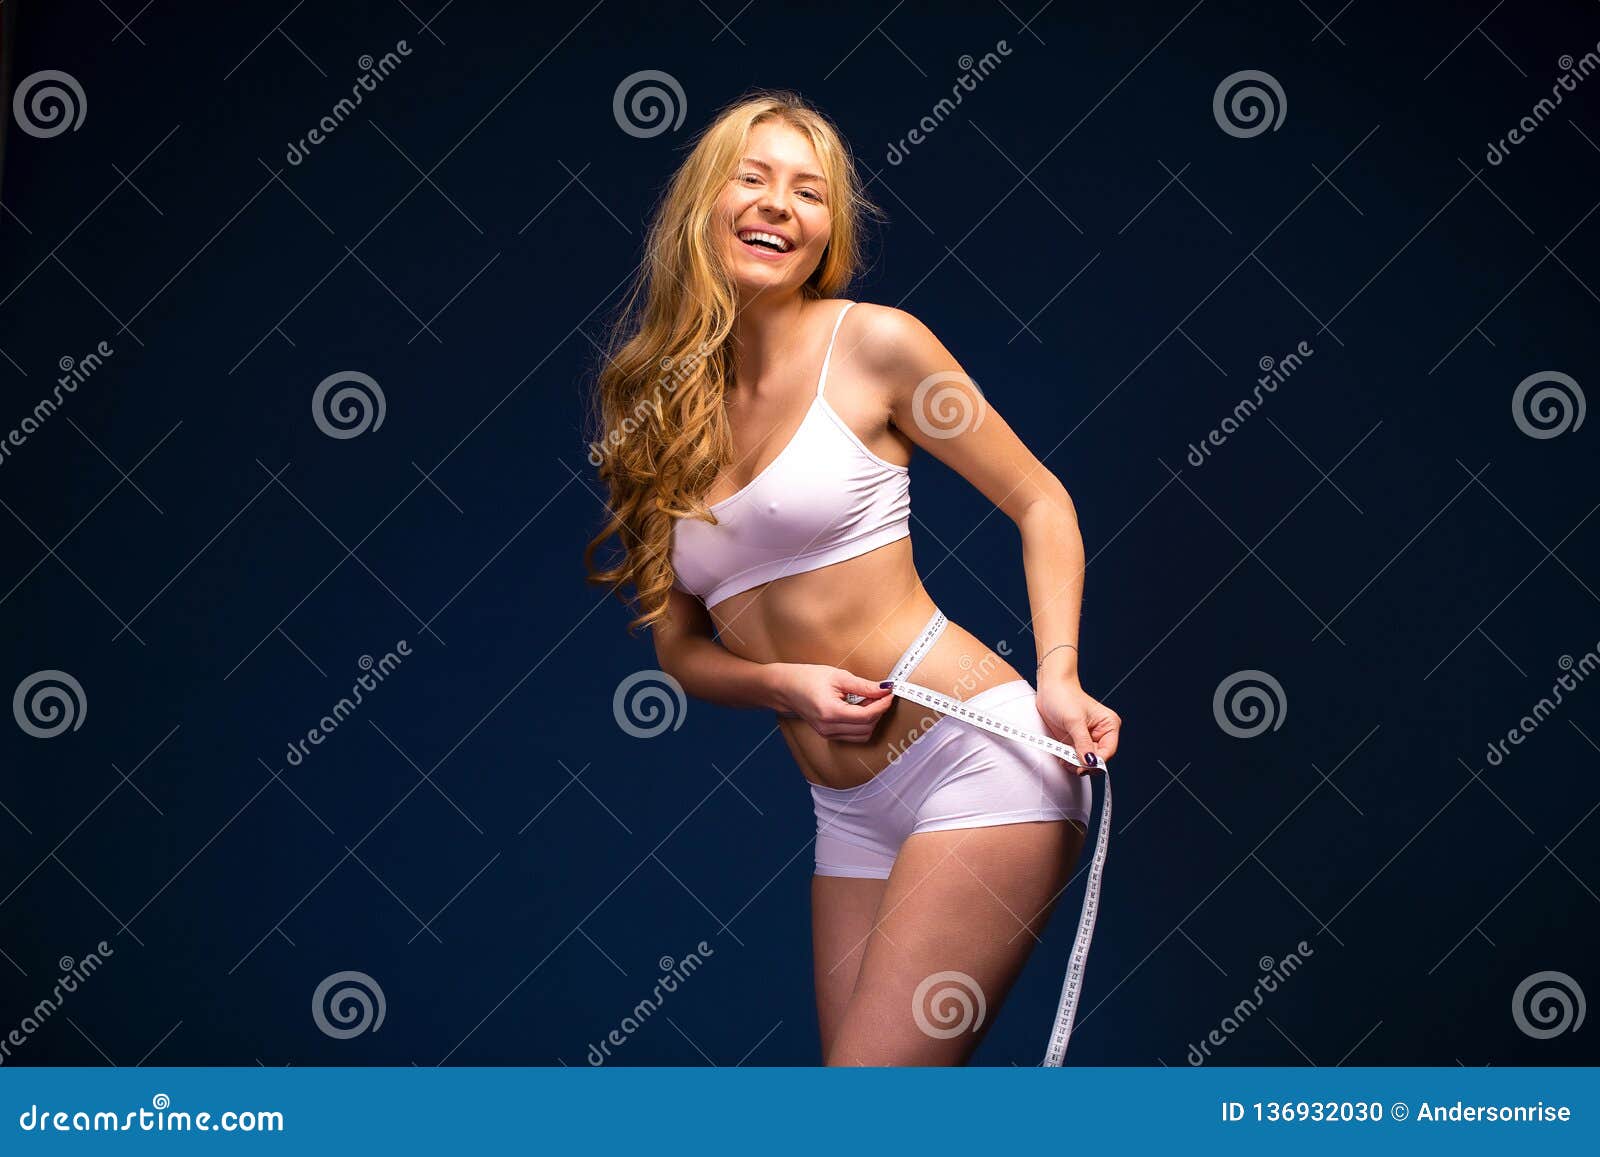 https://thumbs.dreamstime.com/z/young-beautiful-girl-posing-nude-studio-standing-blue-dress-near-white-wall-136932030.jpg